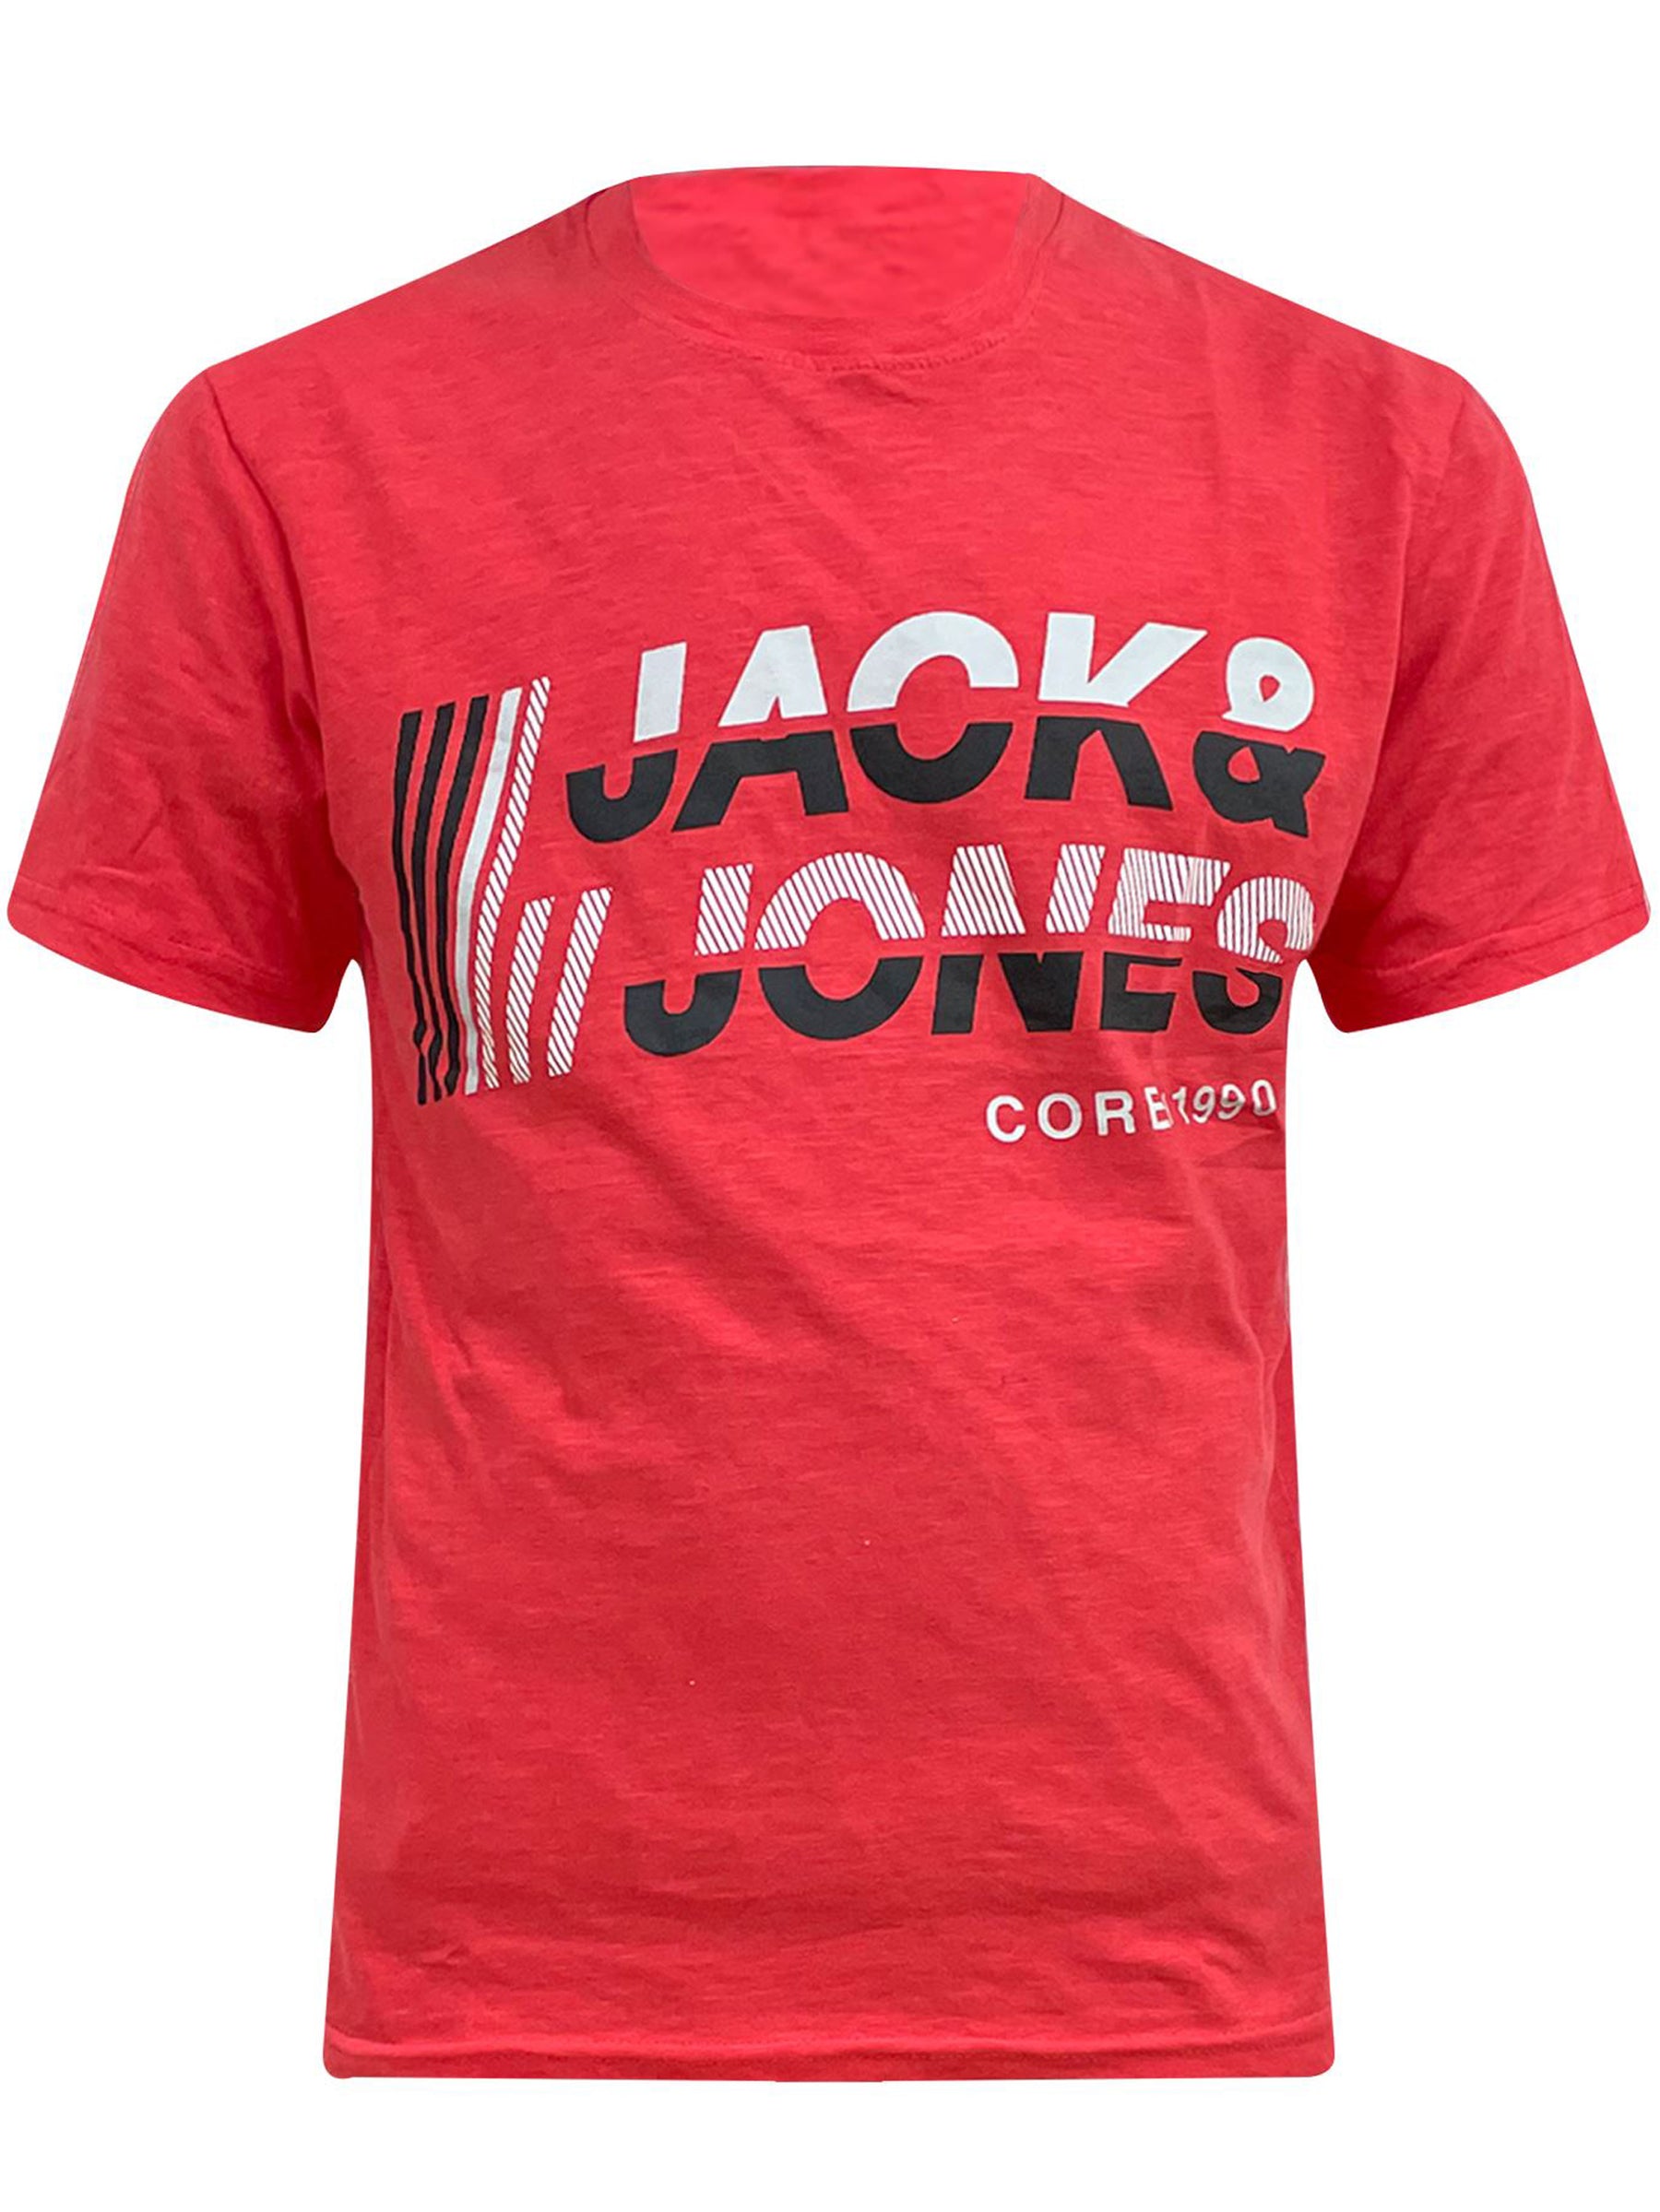 Jack & Jones Logo Print T-Shirt